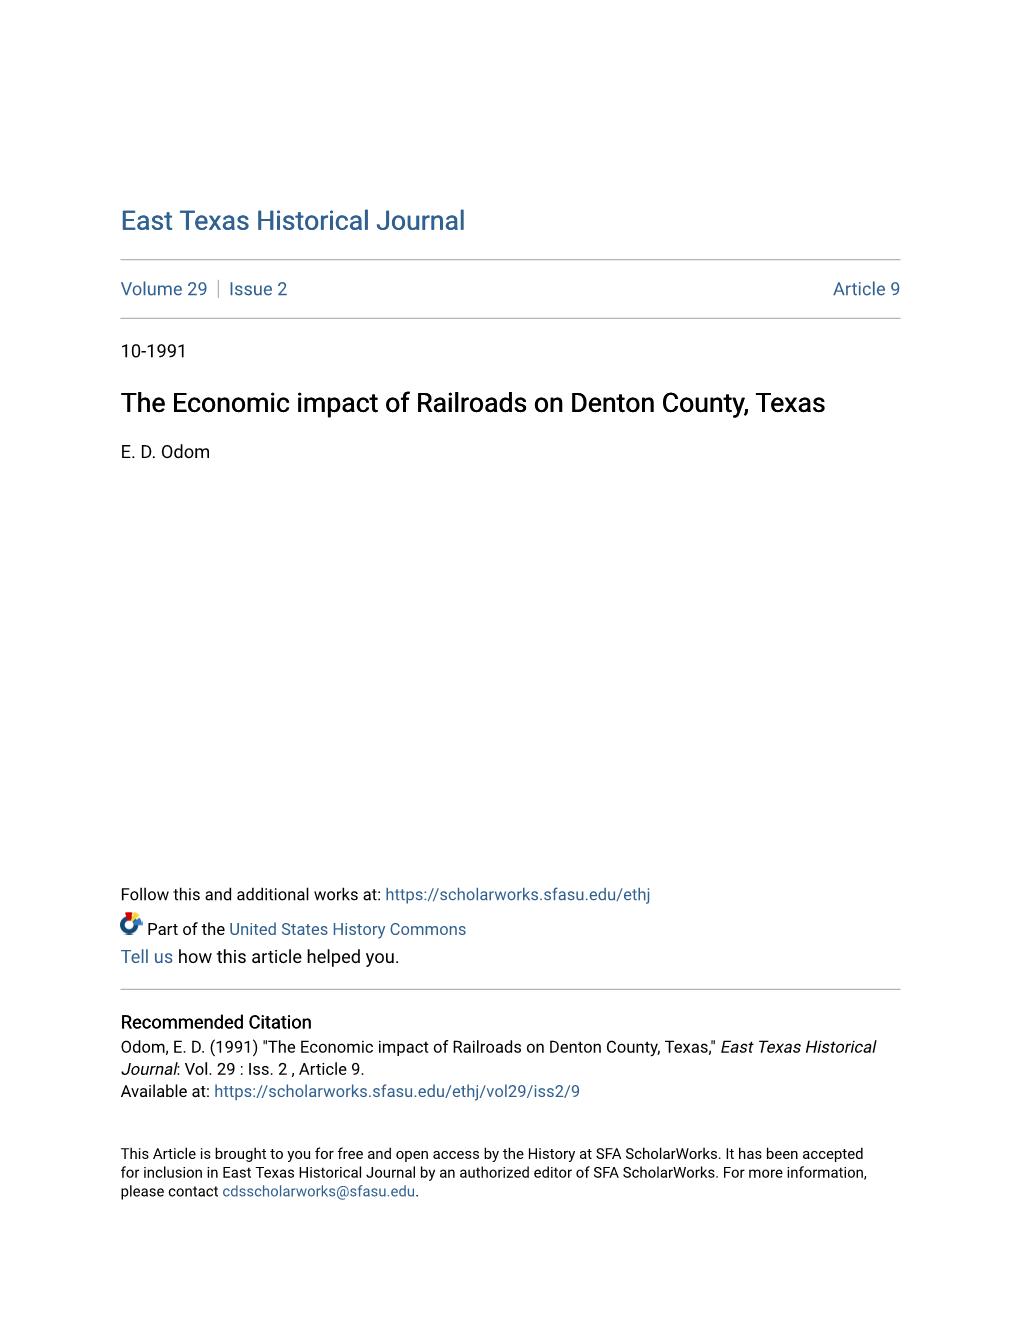 The Economic Impact of Railroads on Denton County, Texas